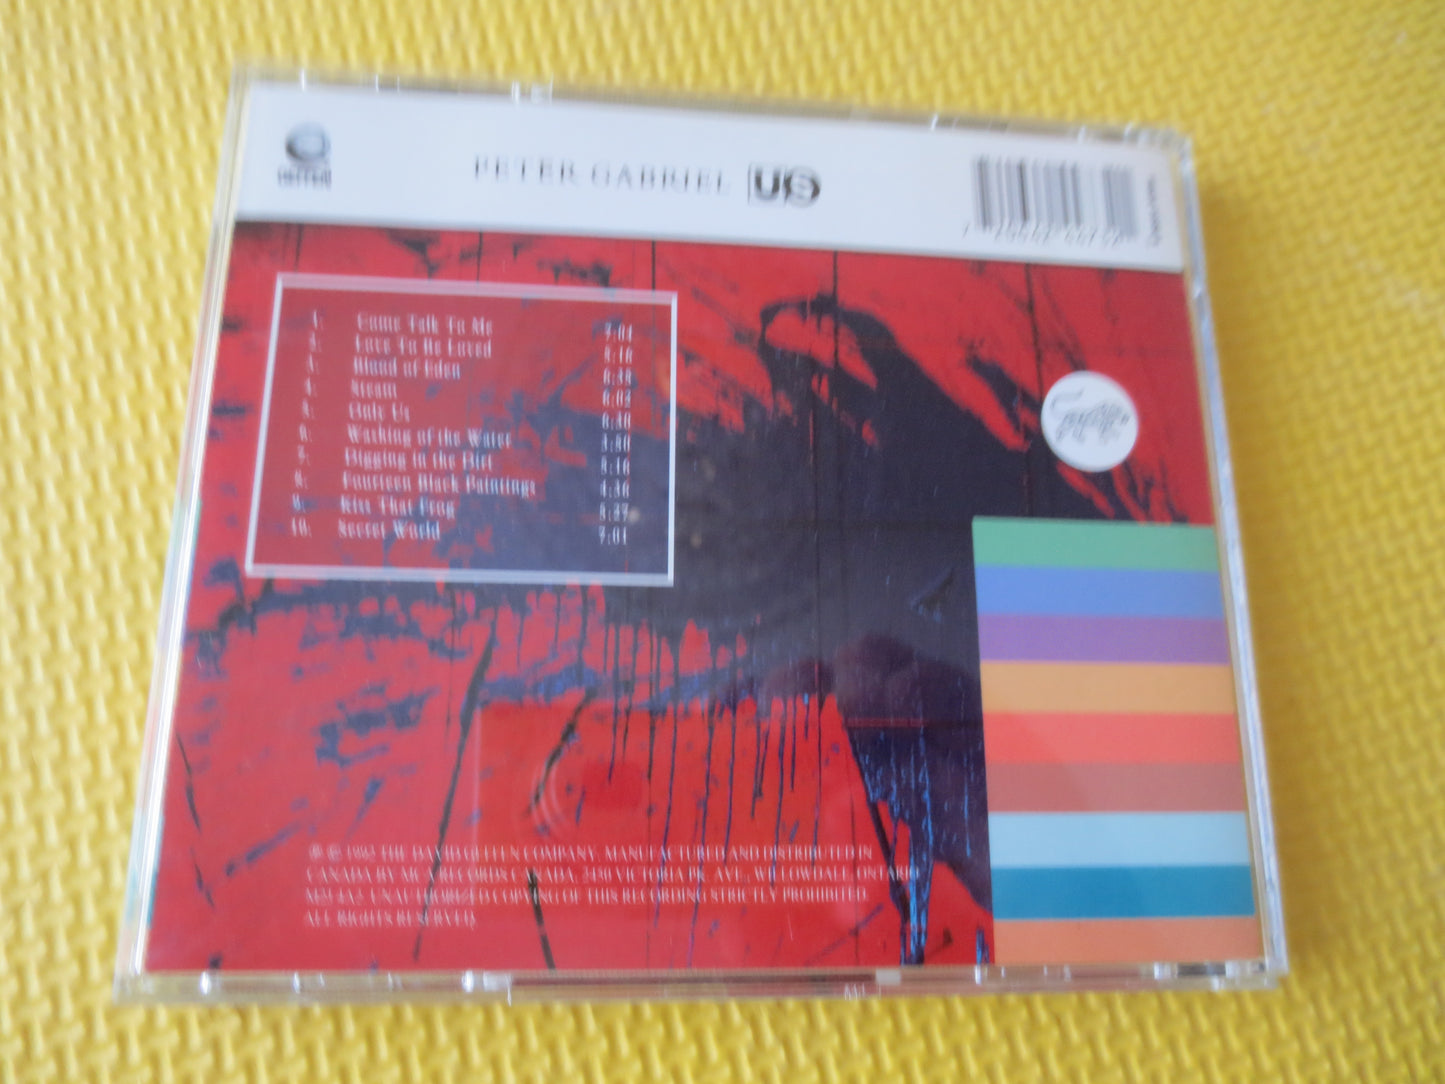 PETER GABRIEL, US, Peter Gabriel Cd, Peter Gabriel Lp, Peter Gabriel Album, Rock Music Cd, Compact Disc, Cds, 1992 Compact Disc